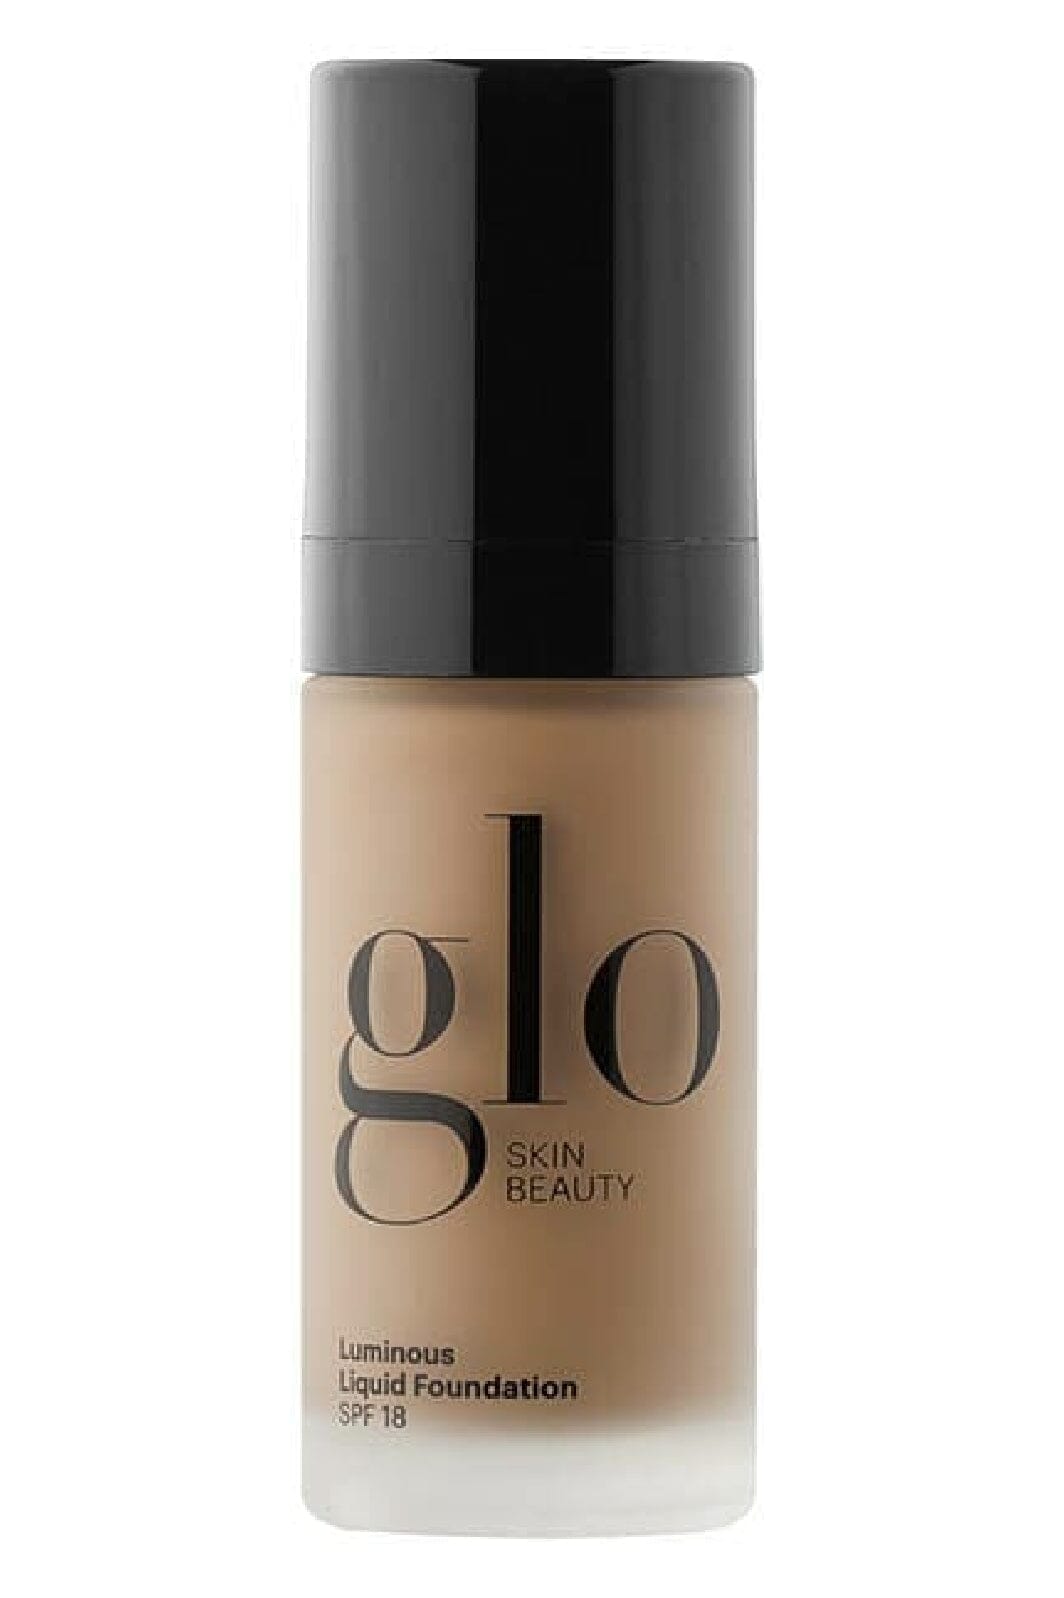 Glo Skin Beauty - Glo Luminous Liquid Foundation SPF 18 - Brûlée, 30 ml Foundation 